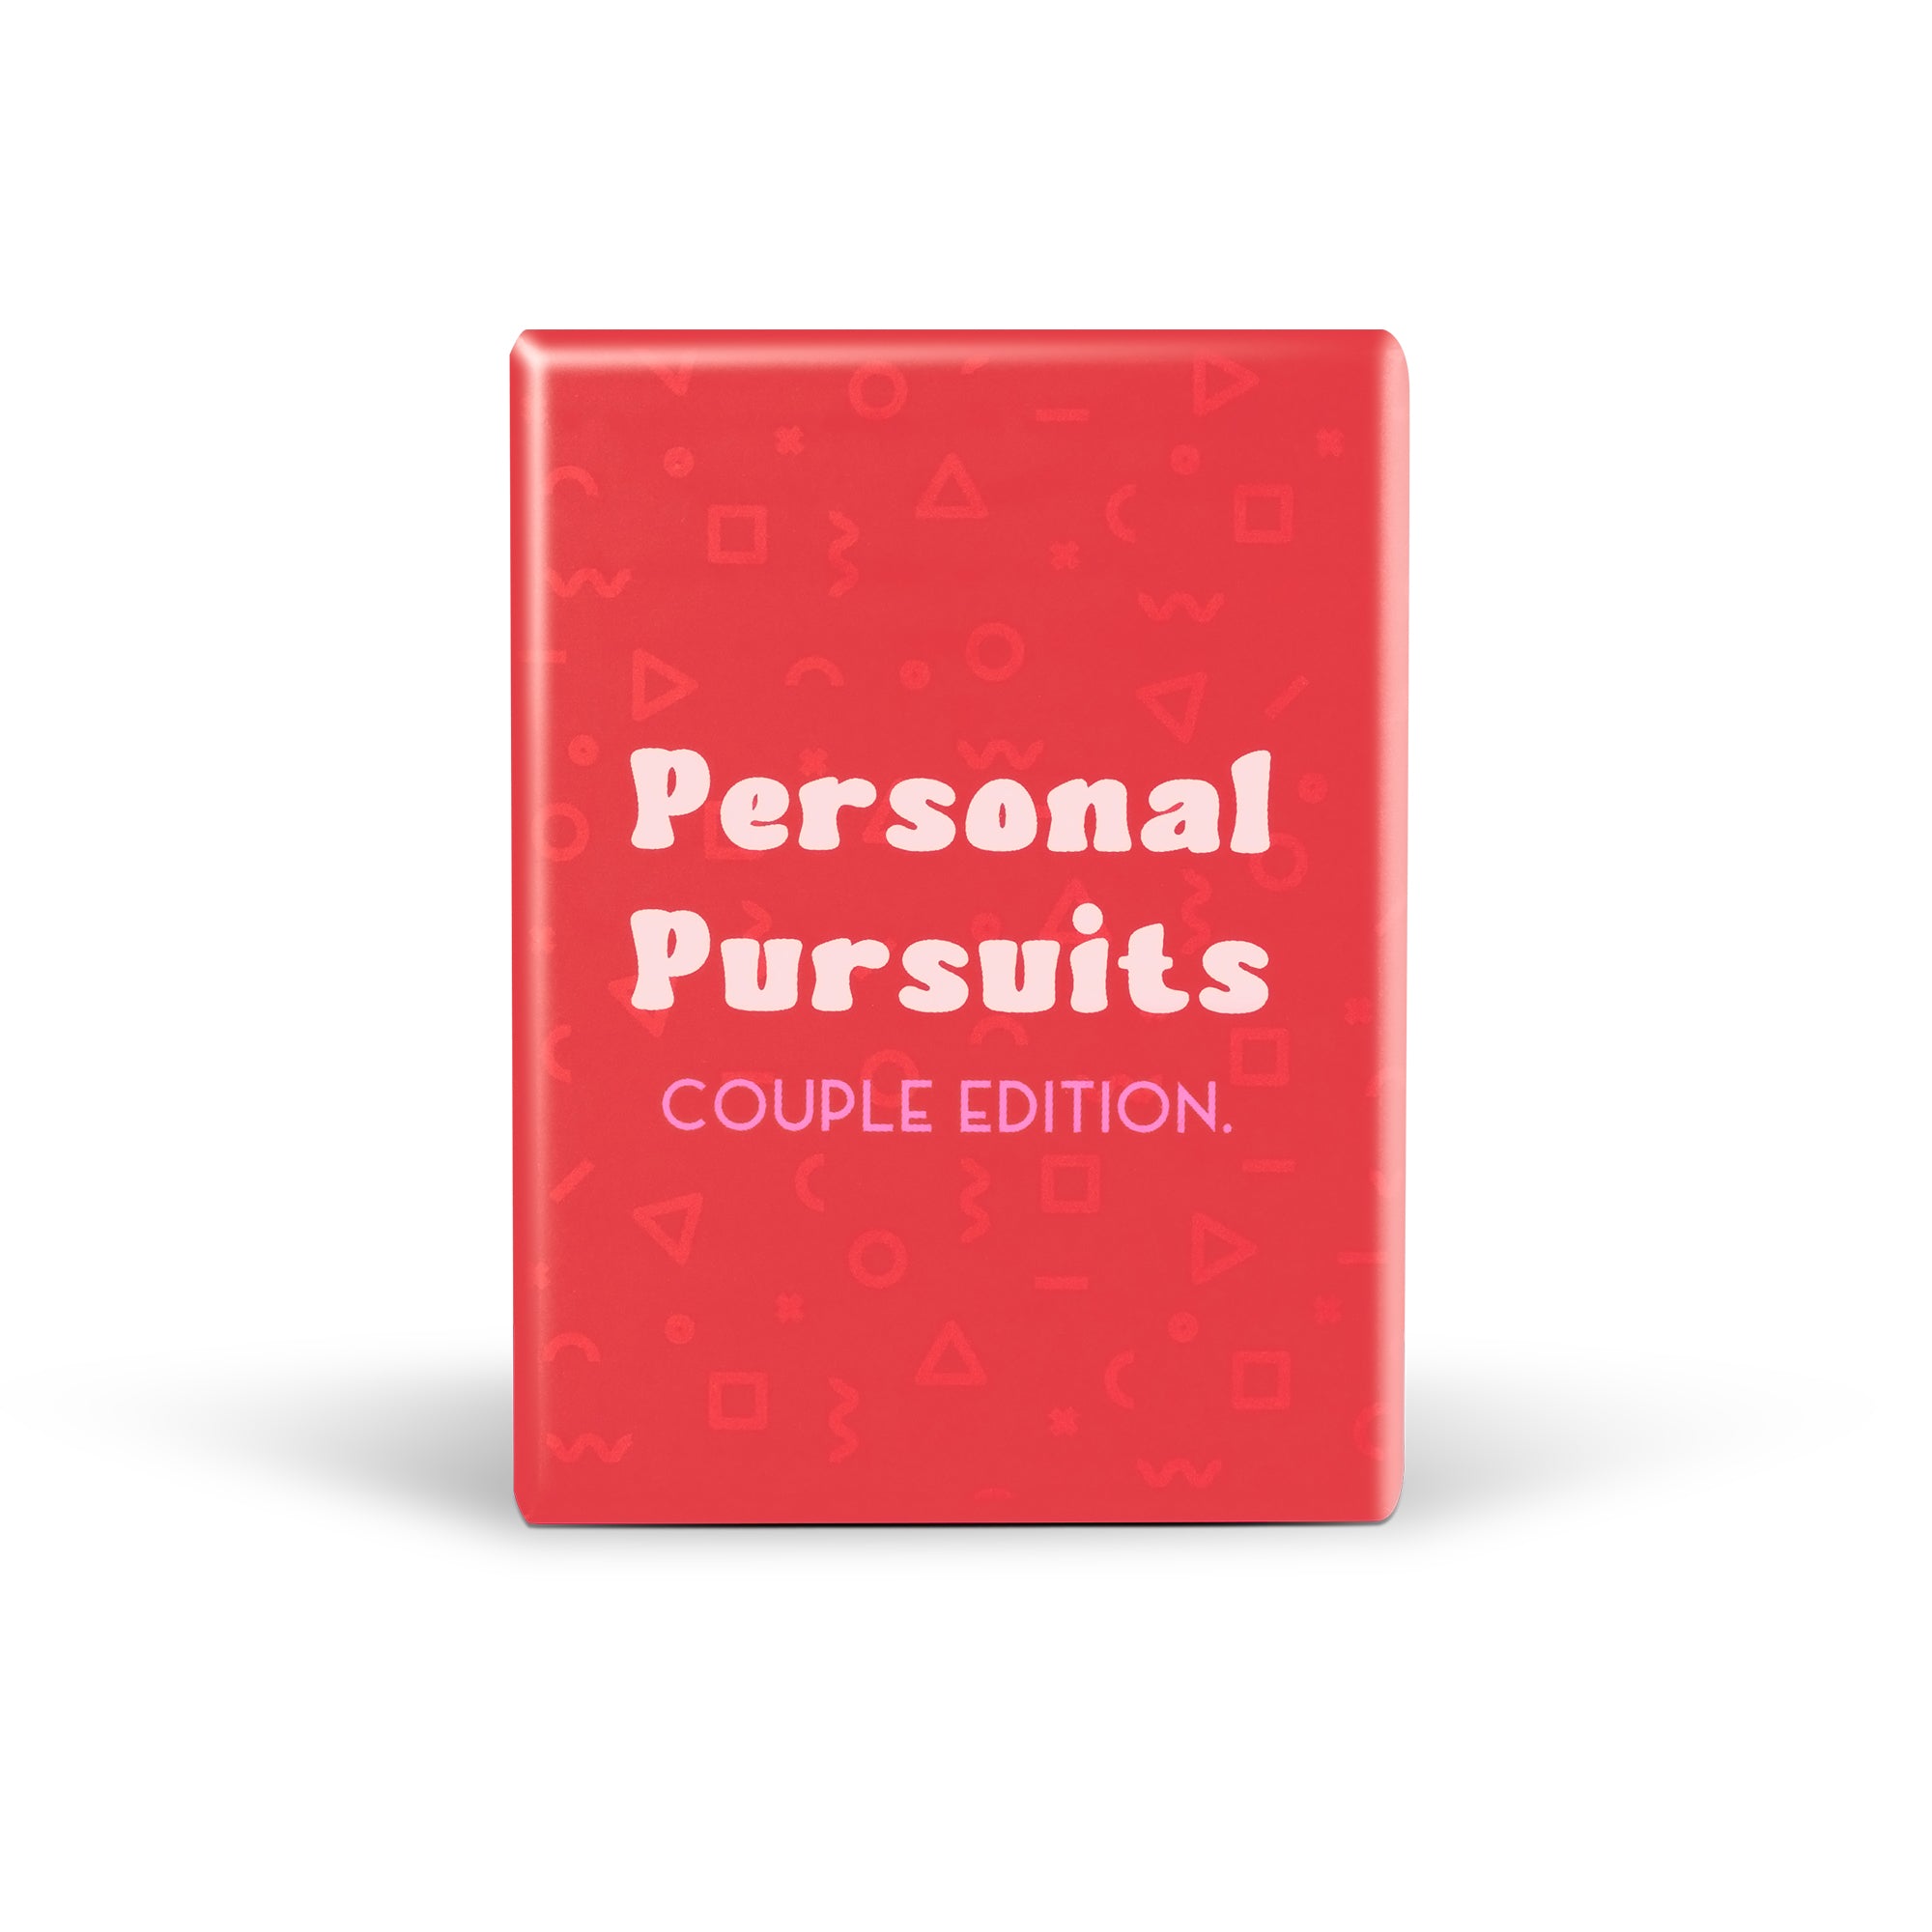 Personal Pursuits - Couple Edition